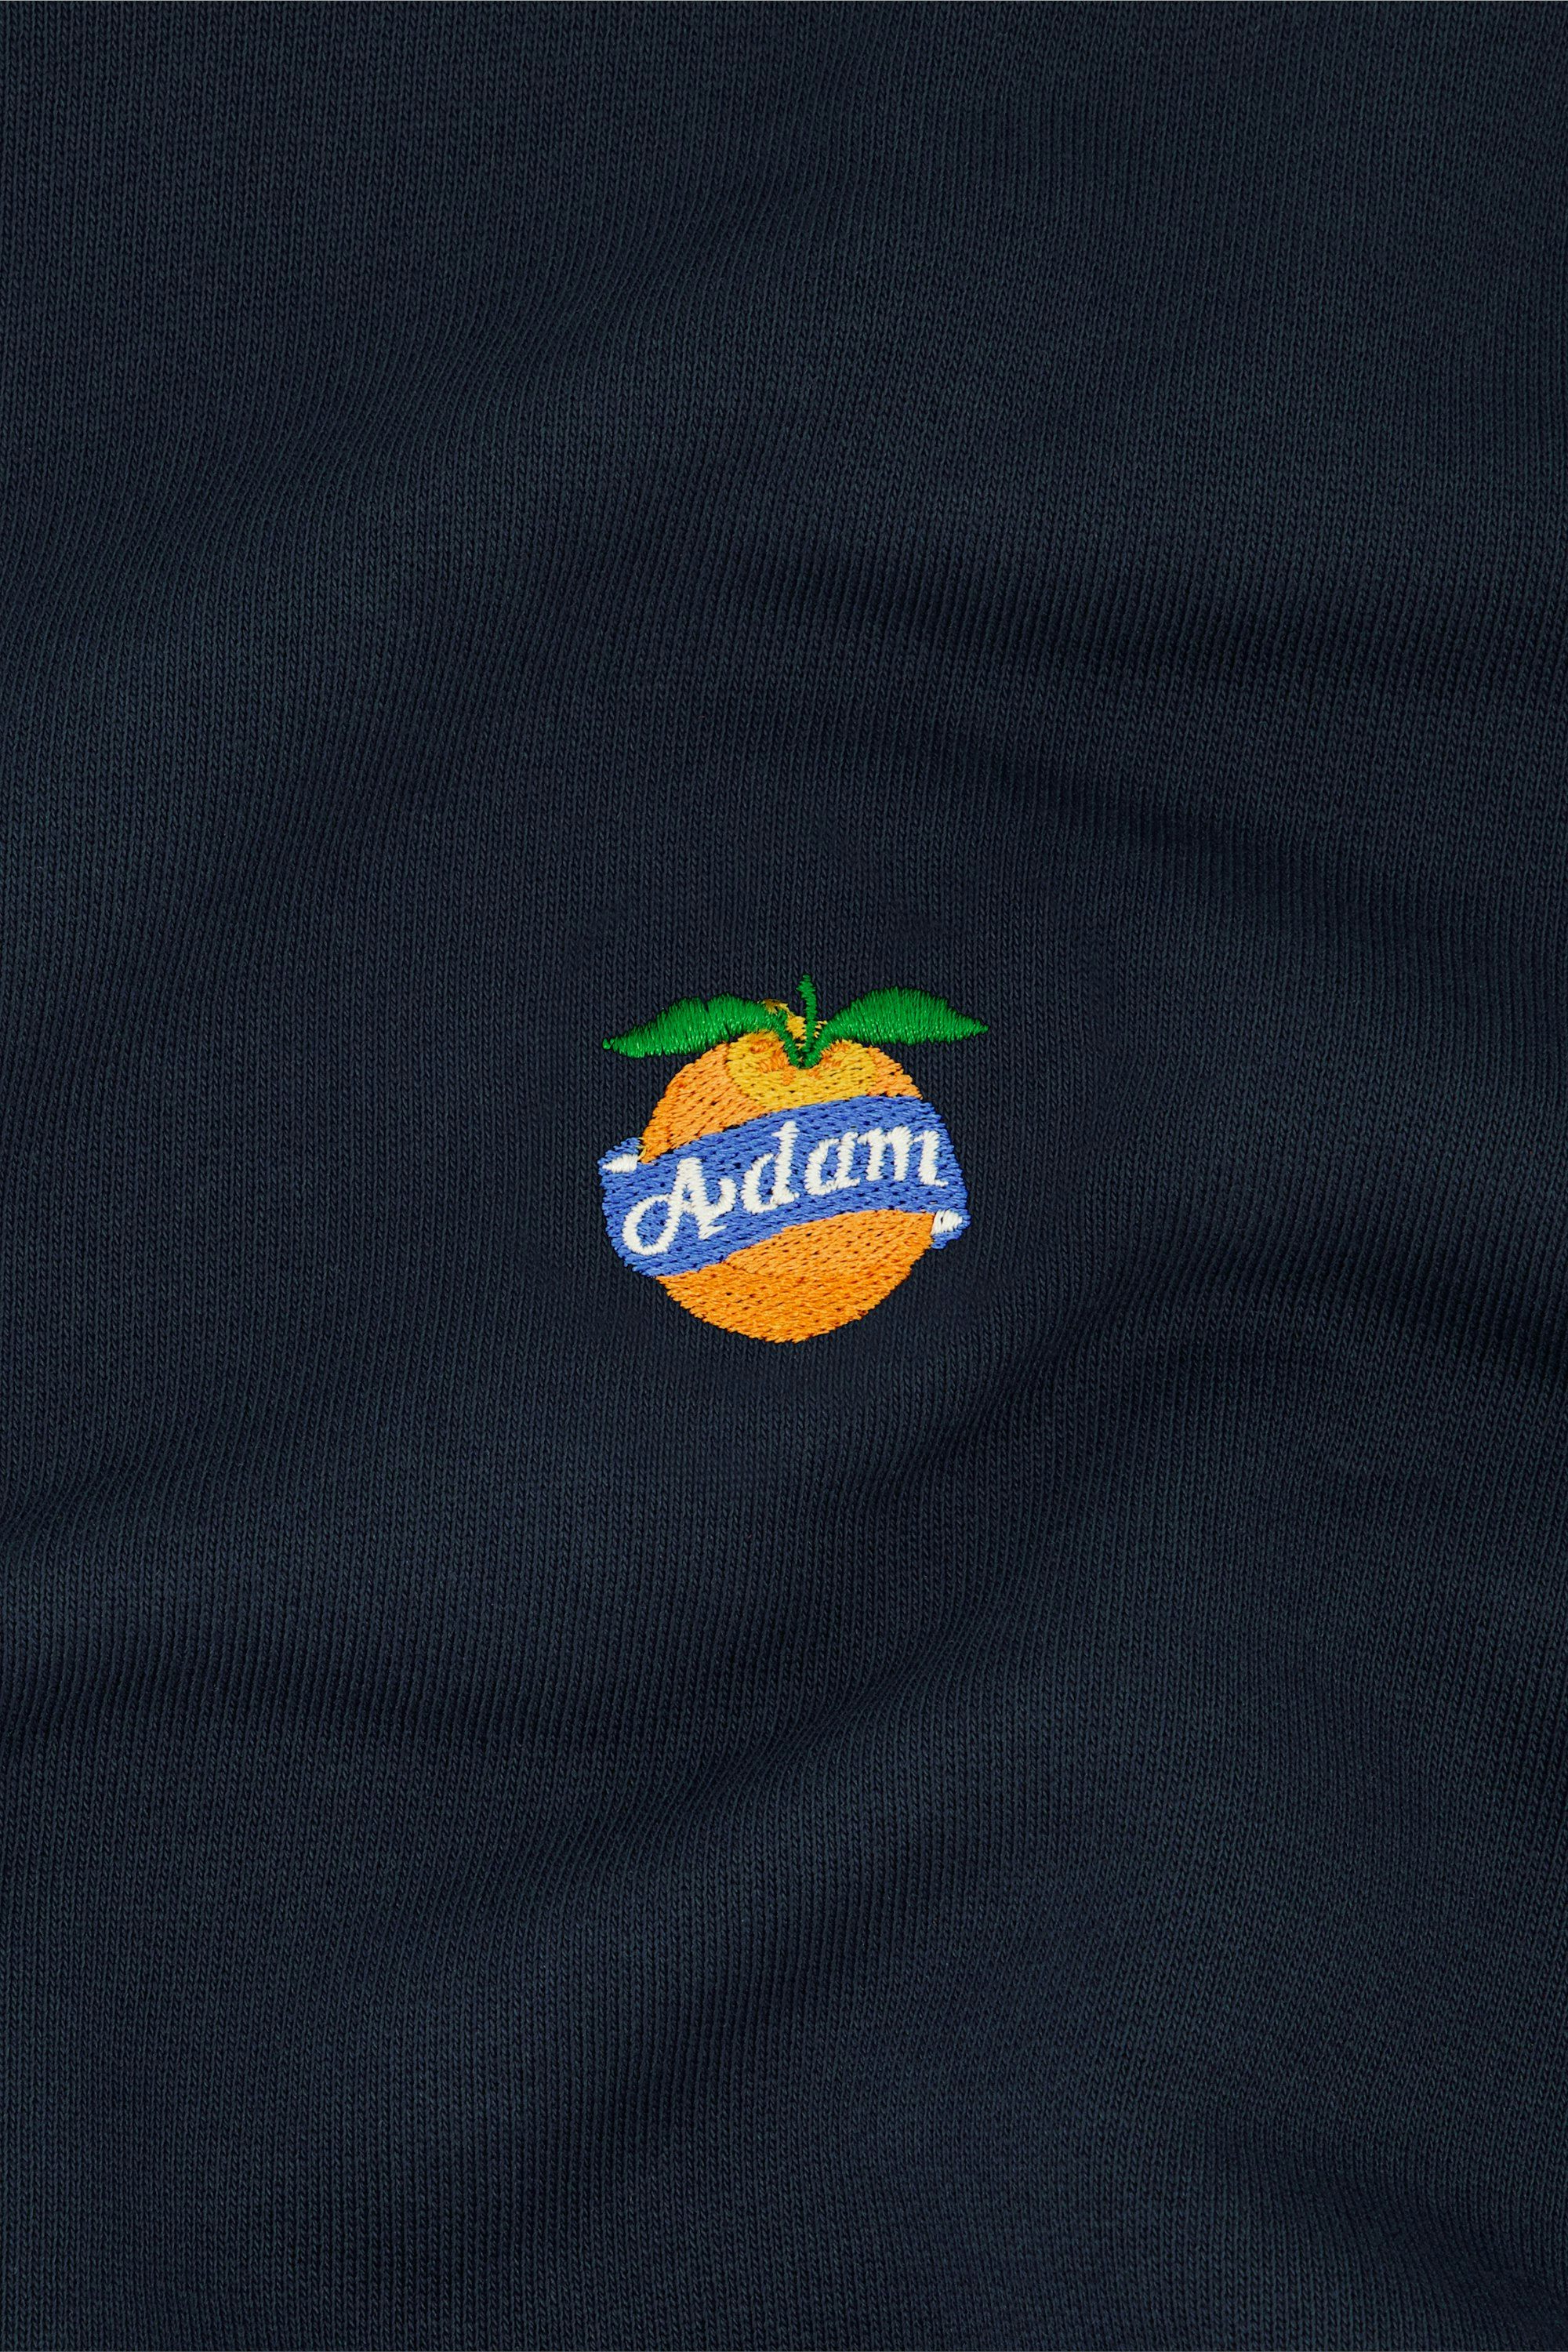 A-dam Orange